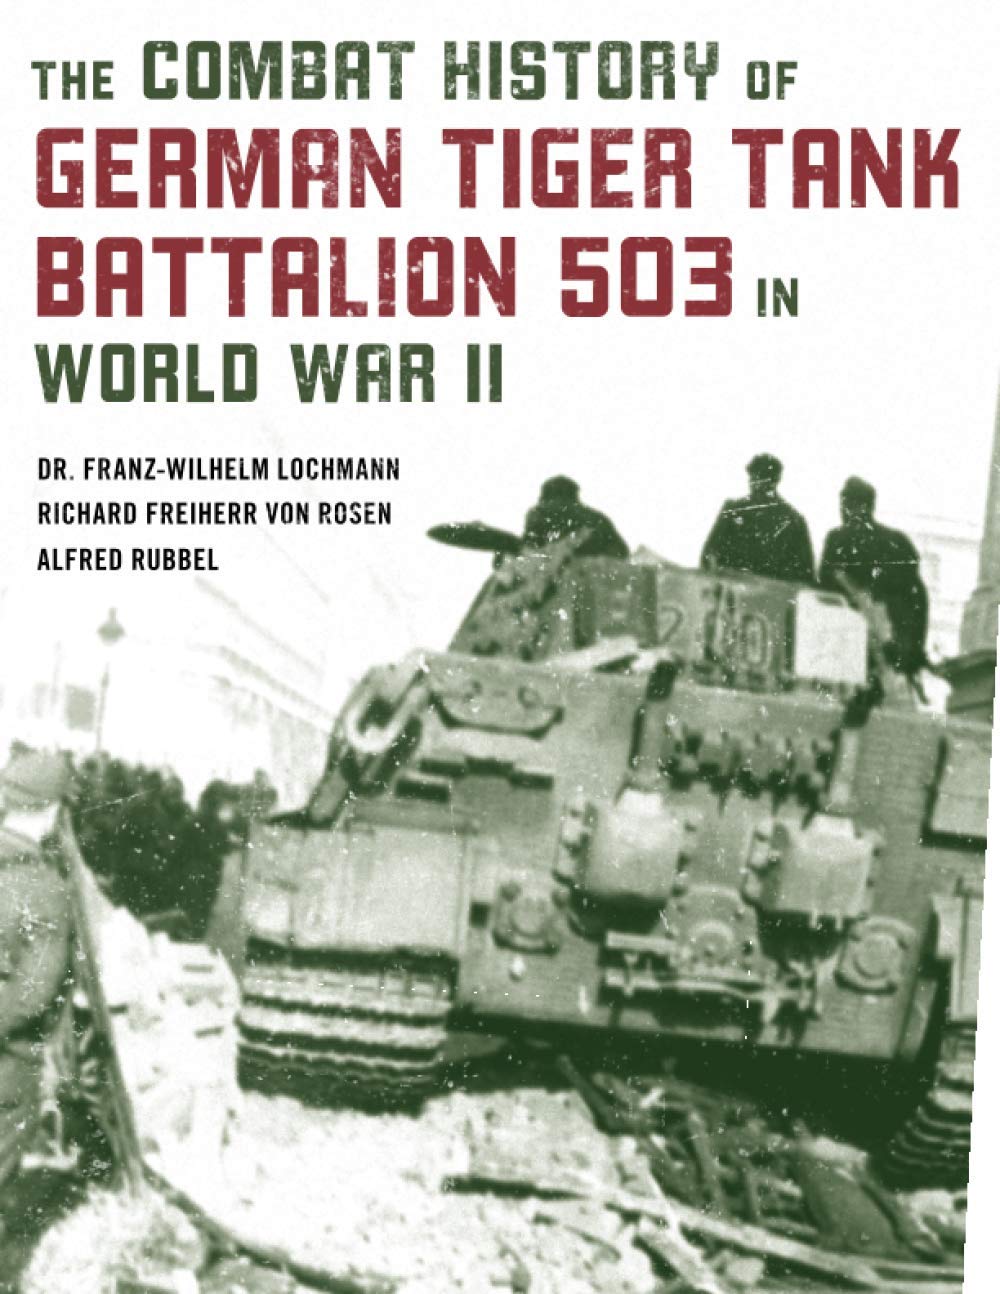 The Combat History of German Tiger Tank Battalion 503